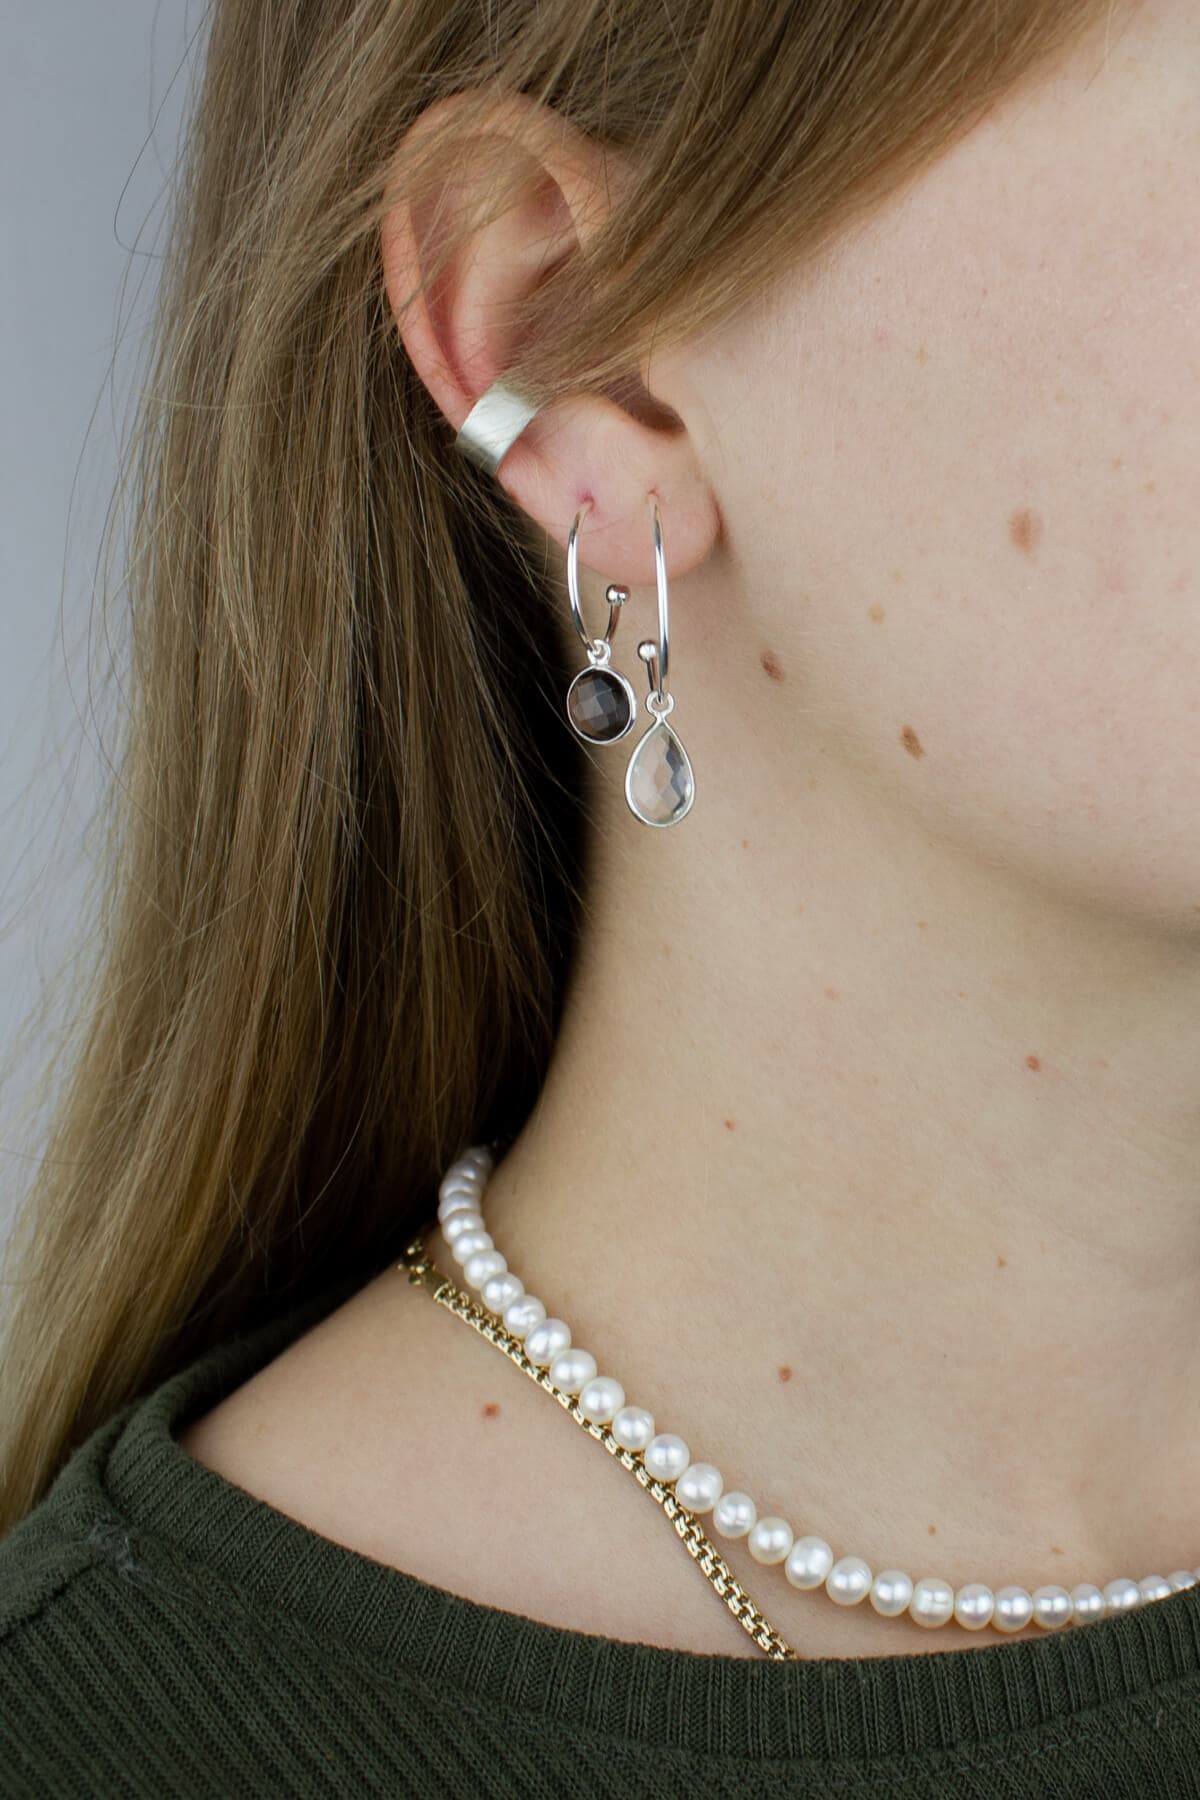 Slver hoop earrings with smoky quartz, crystal quartz and silver ear cuff on a model